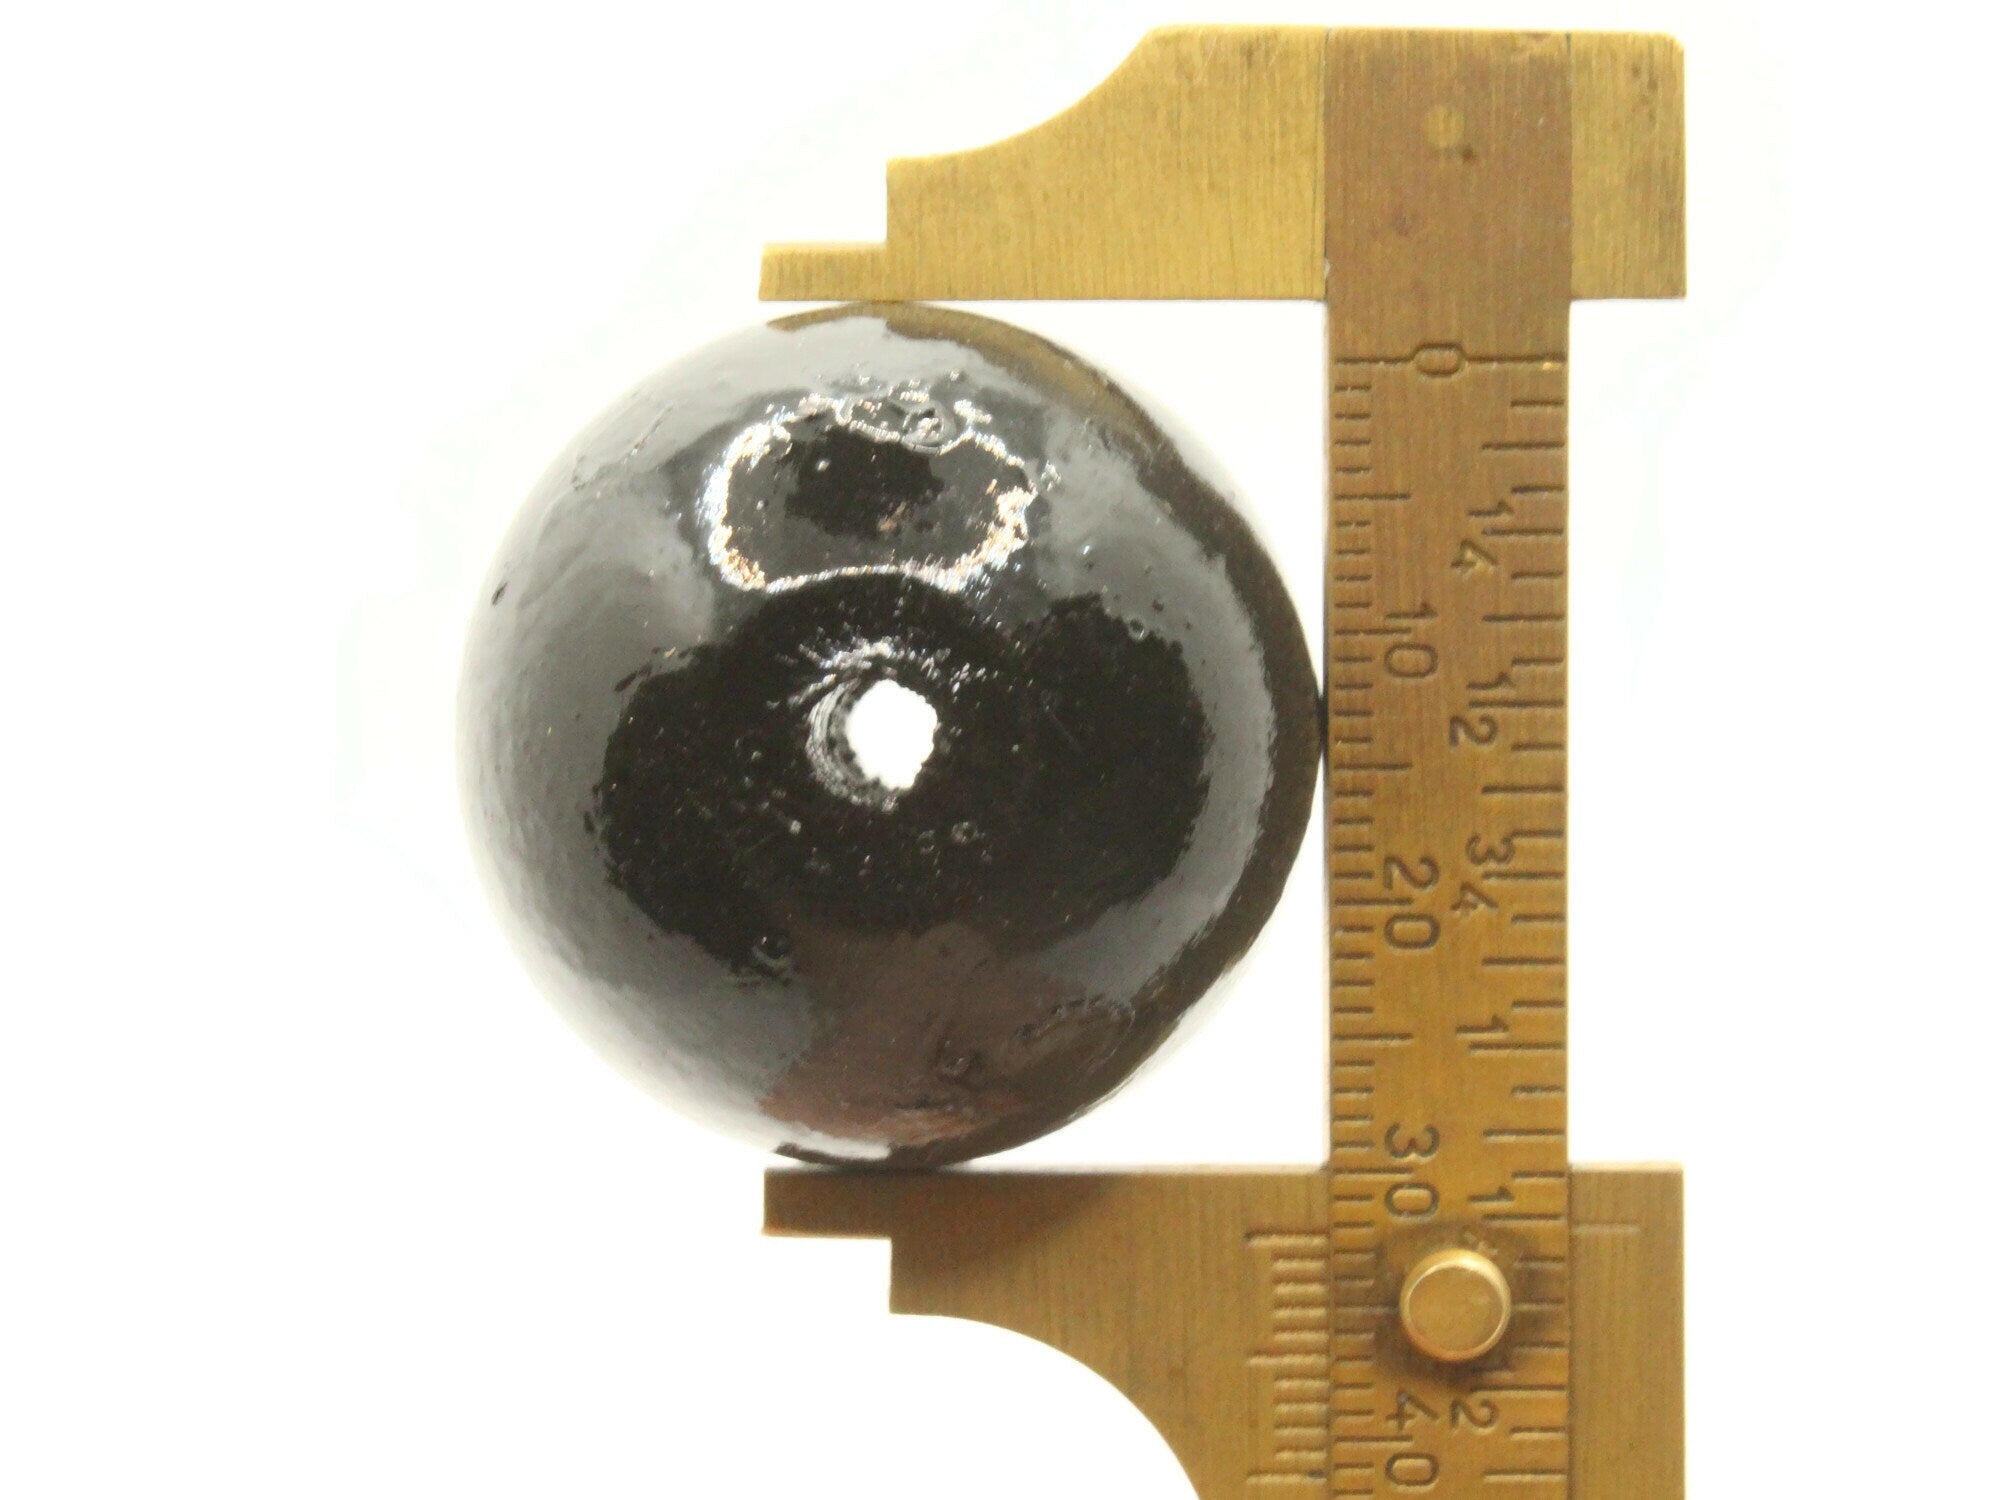 150 Painted Black Barrel Wood Beads 17mm x 14mm Diameter 8mm Large Hole